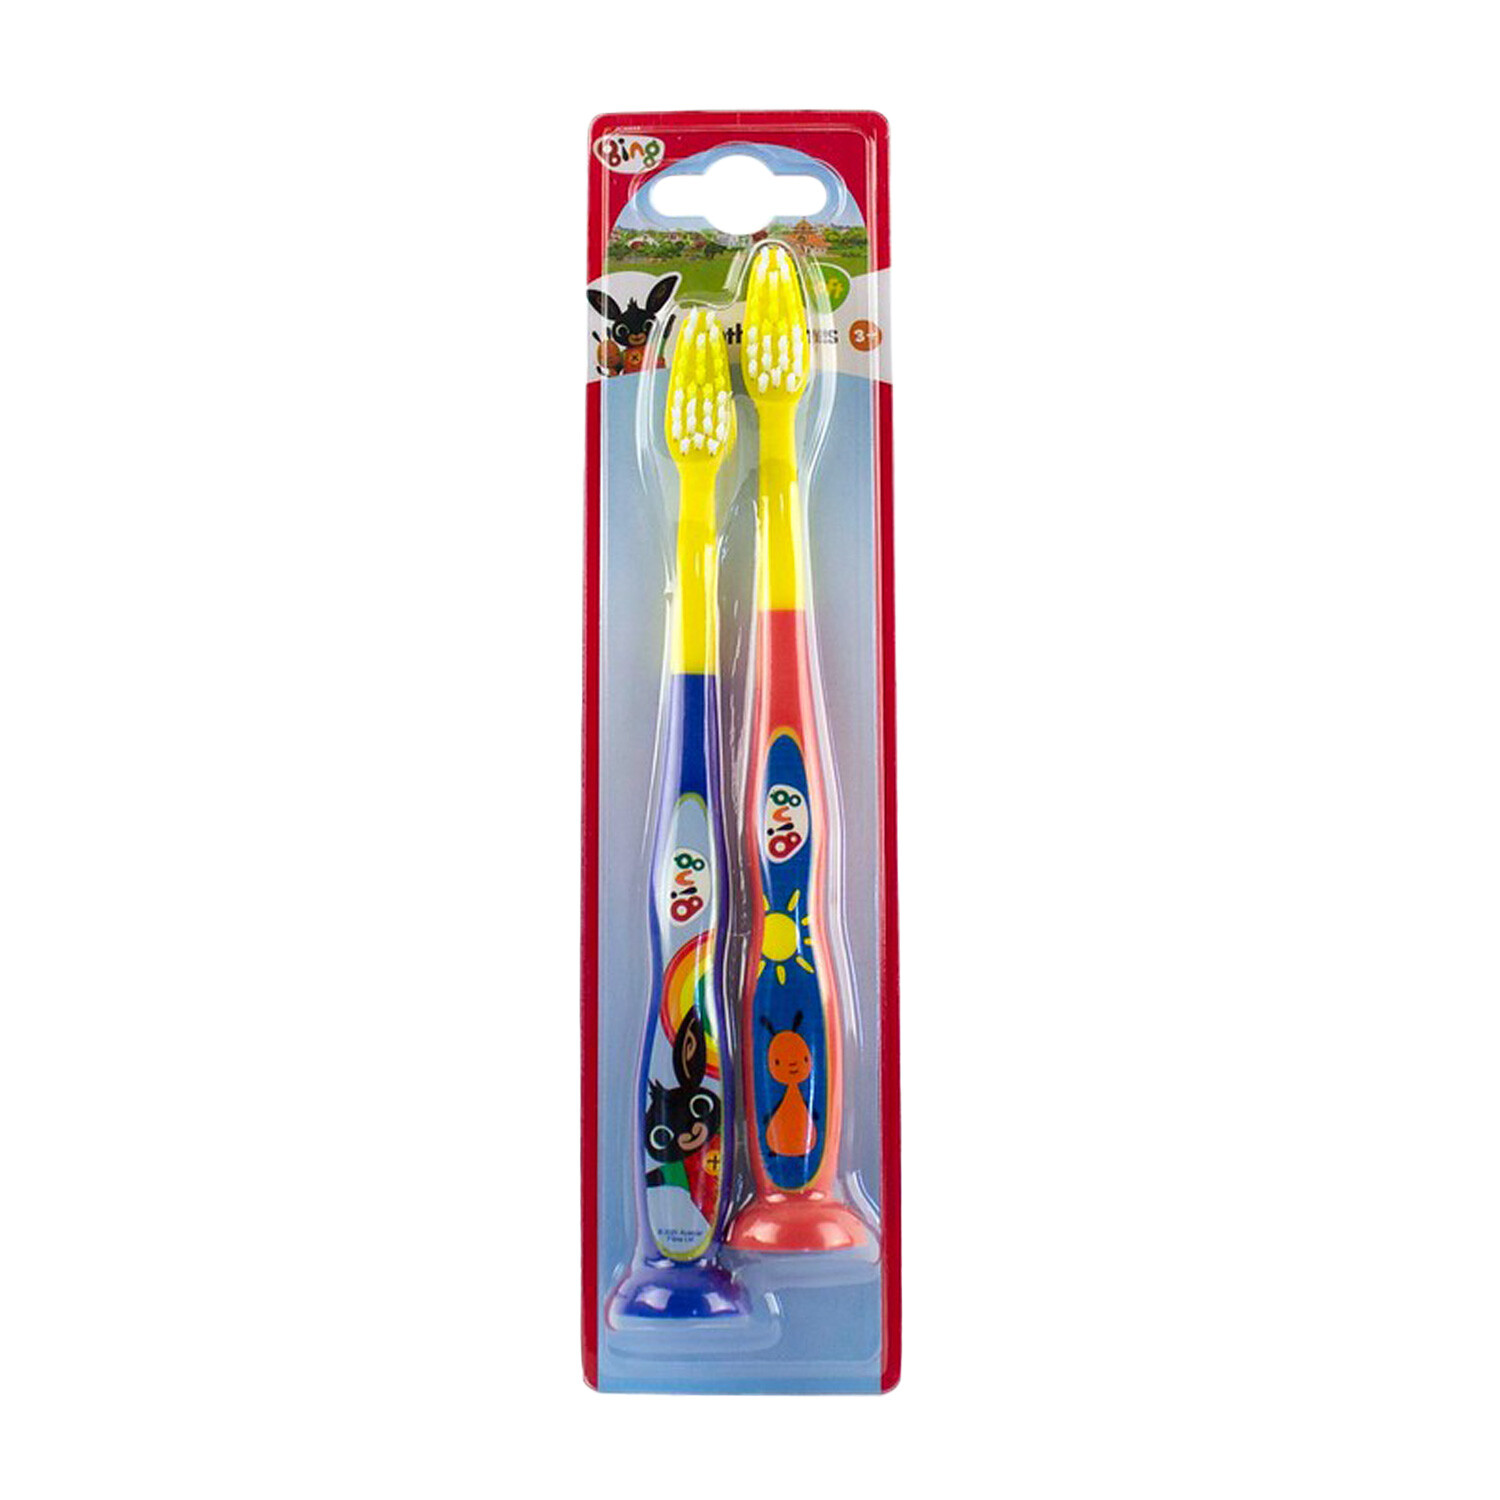 Pack of 2 Bing Toothbrushes Image 1